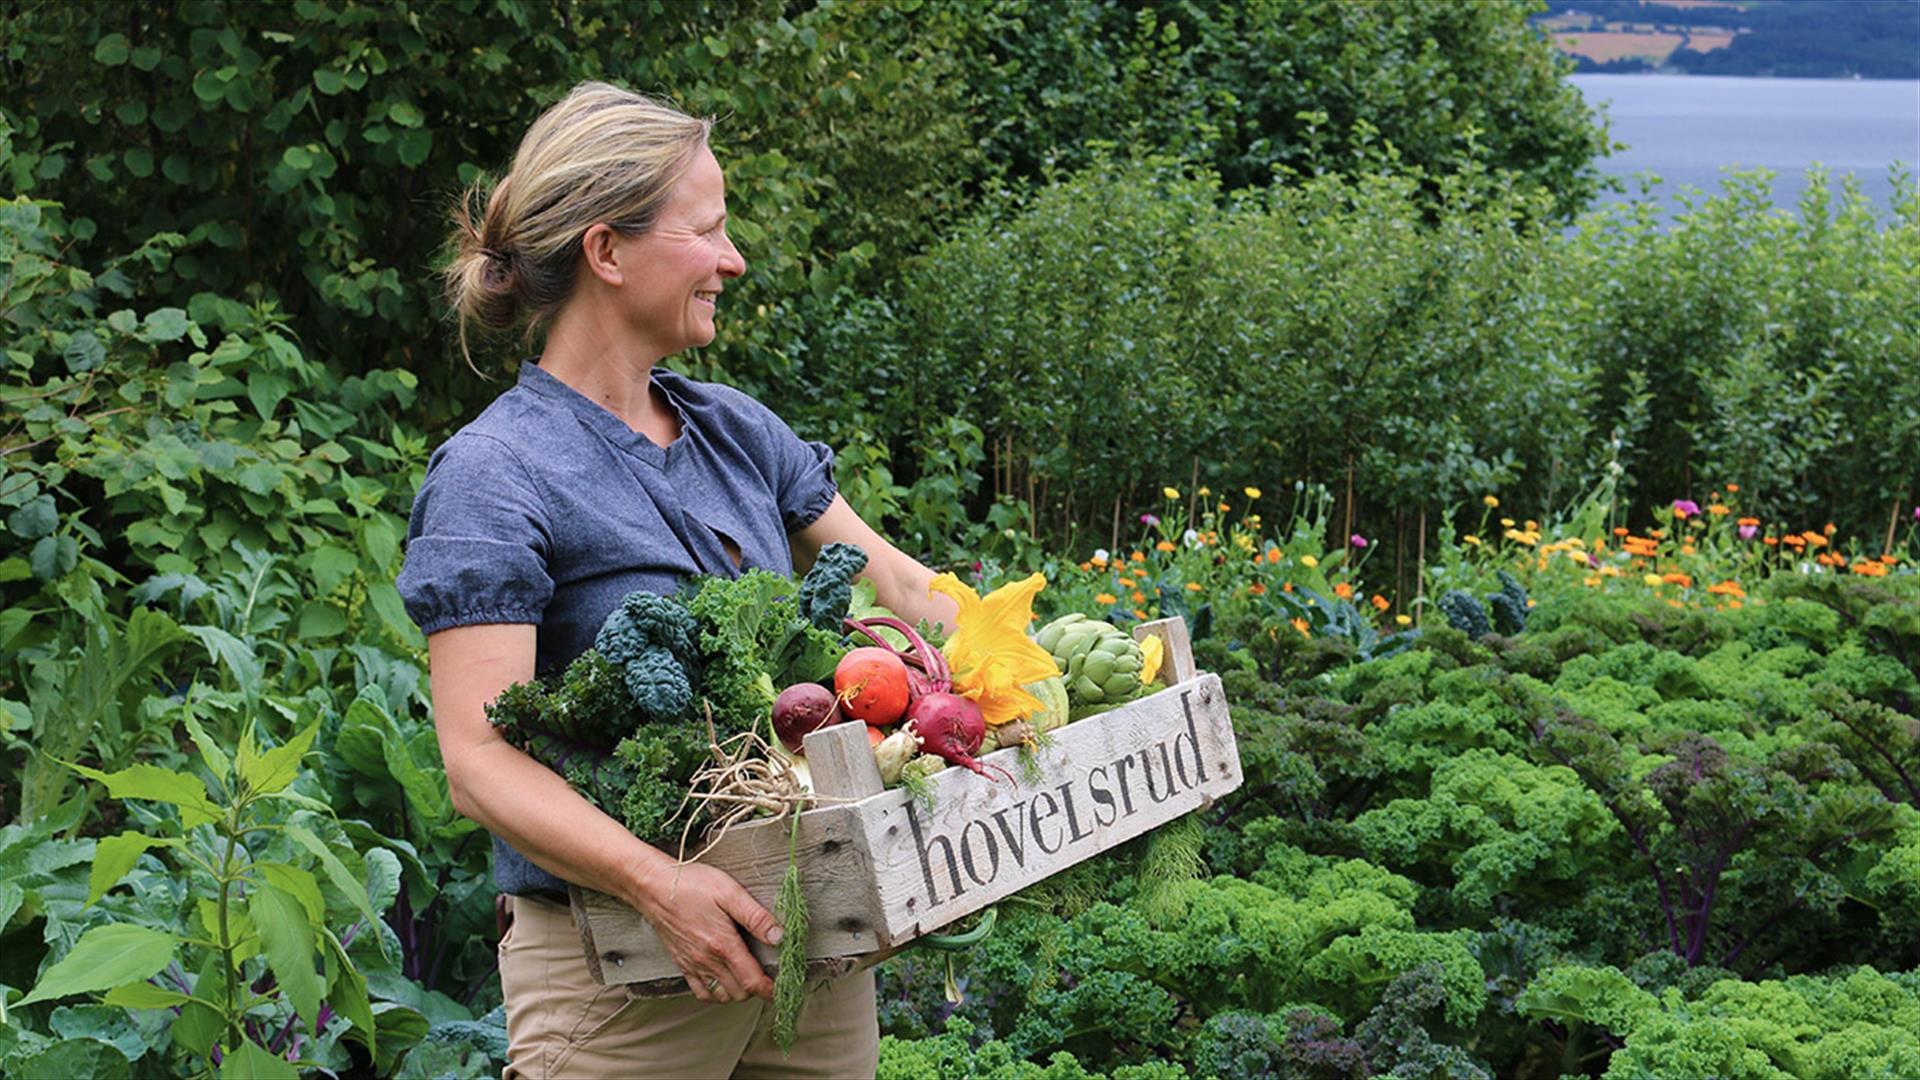 Hovelsrud farm - hostess in the garden